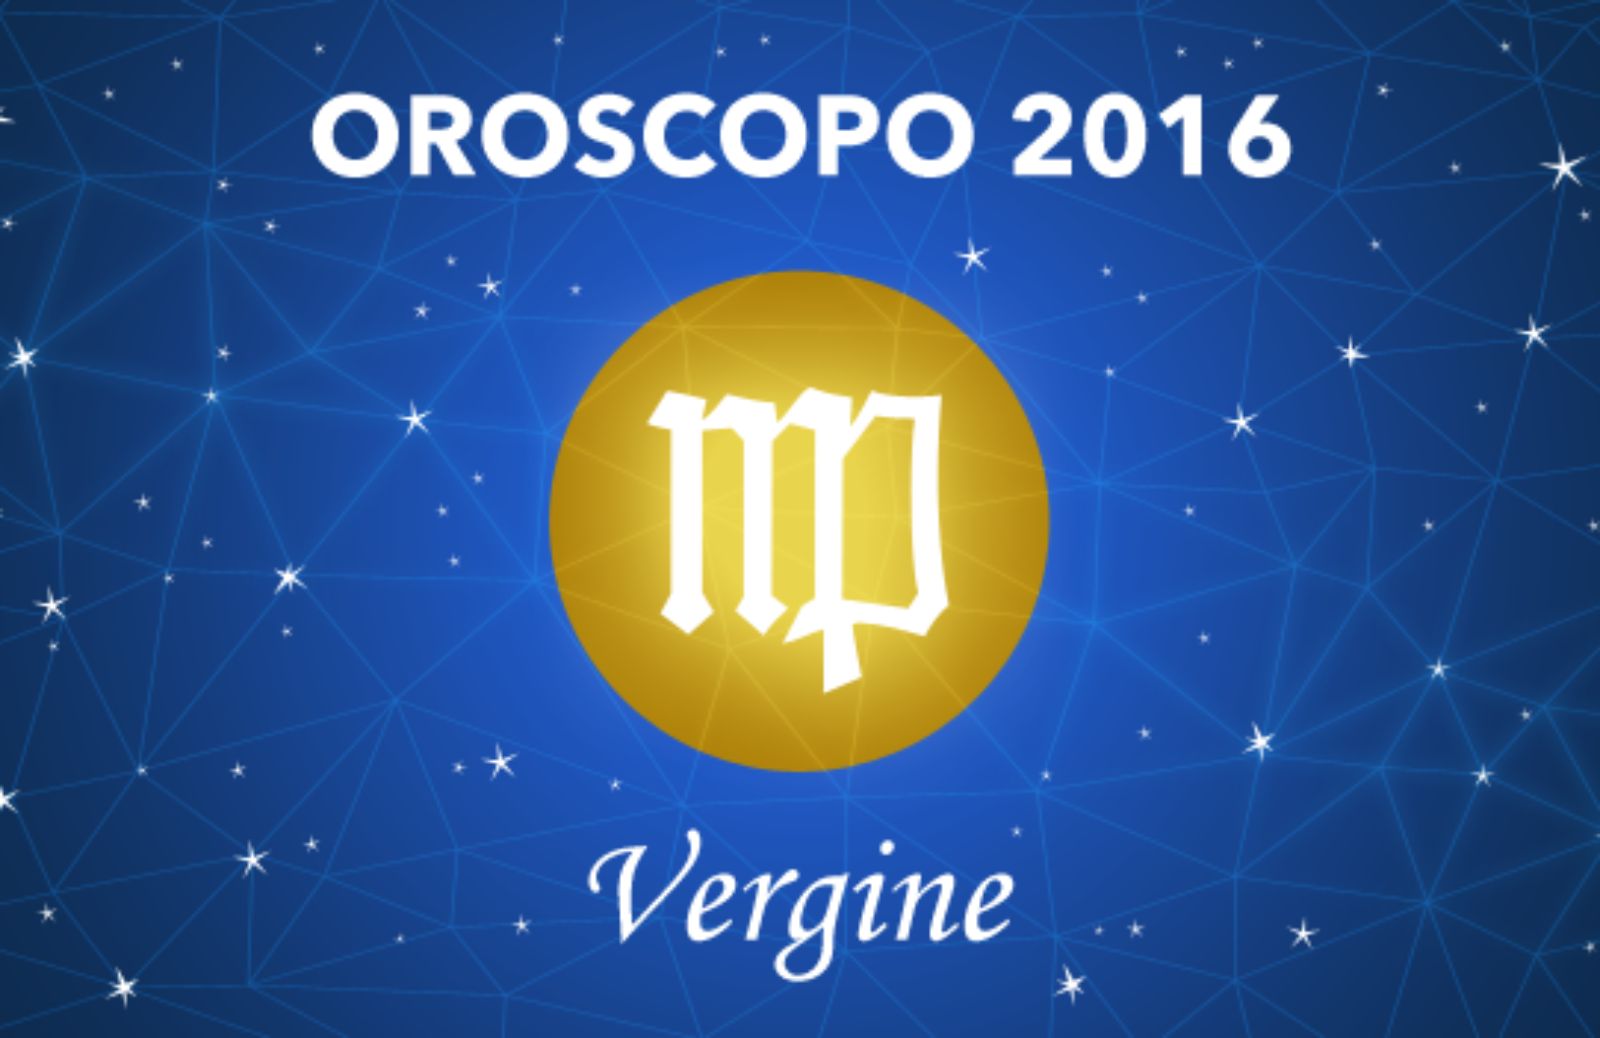 Oroscopo 2016 - Vergine